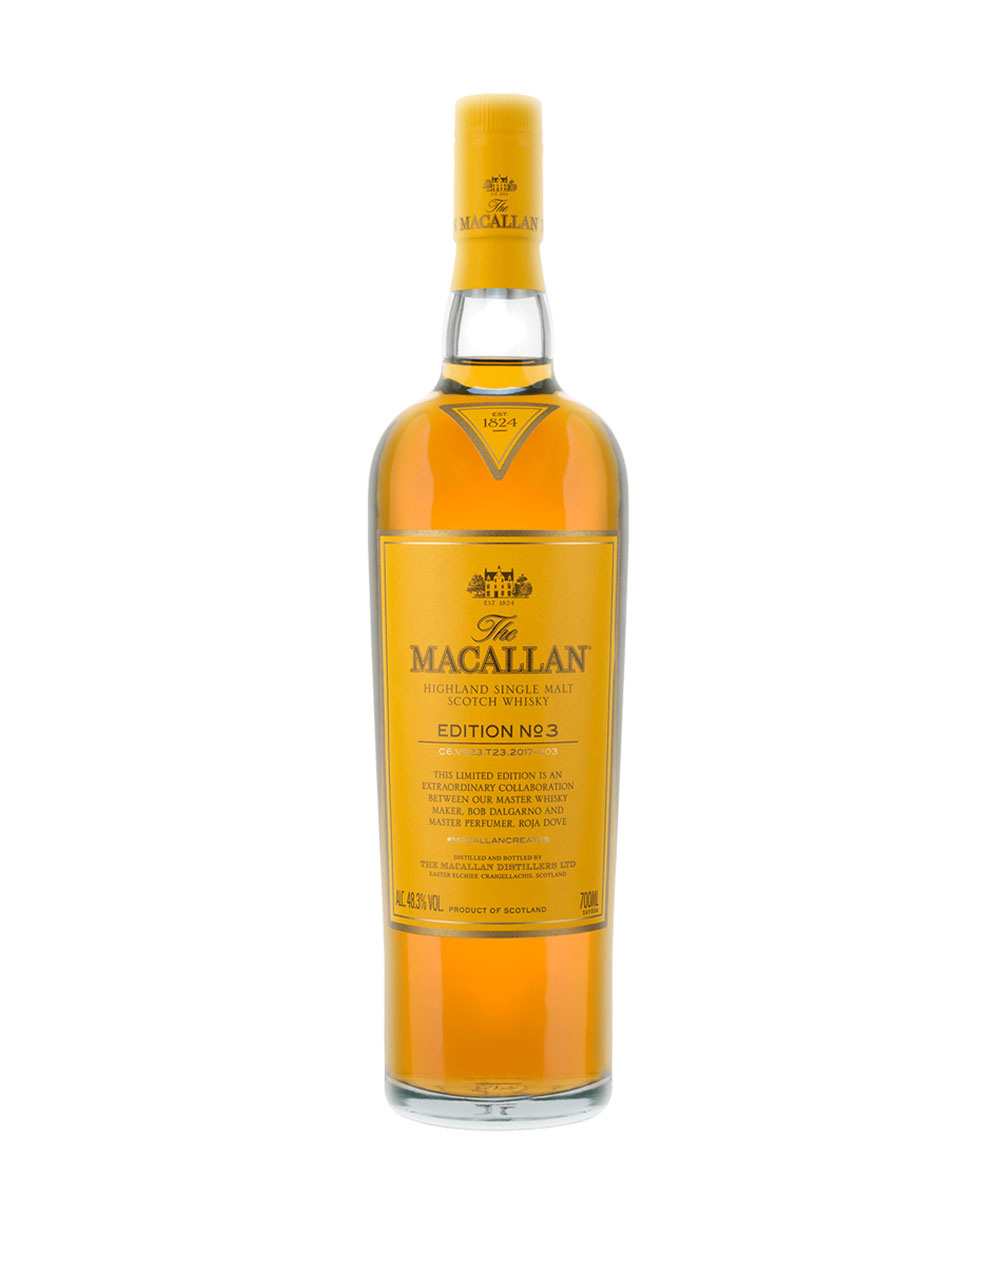 The Macallan edition No. 3 Single Malt Scotch Whisky